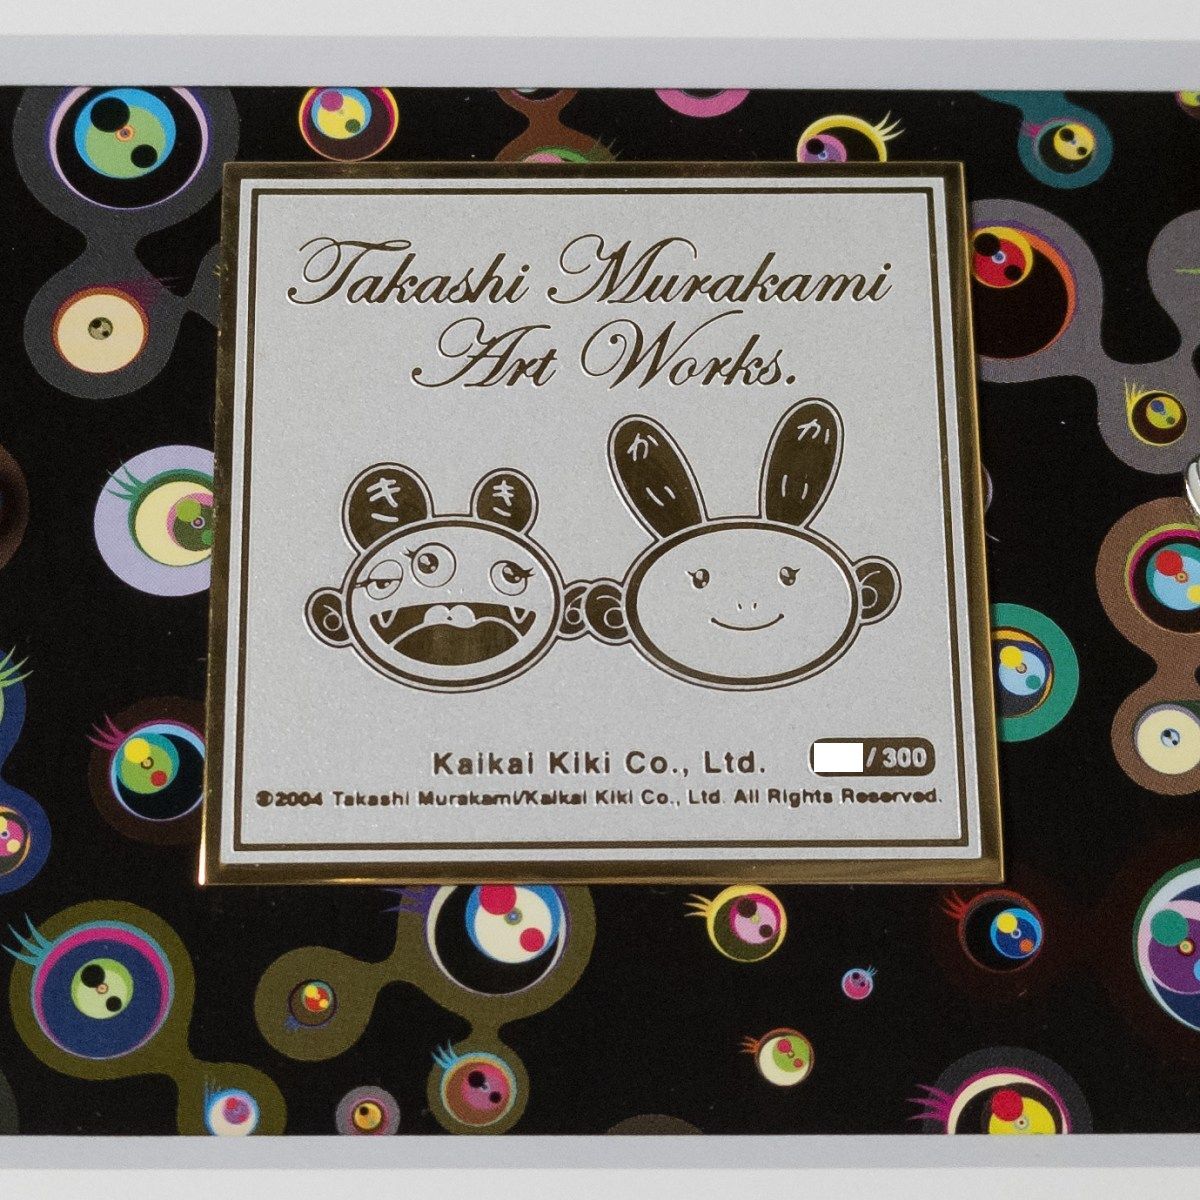 ka кальмар ikiki Мураками . оригинал герой булавка z рамка комплект 2004 ED300 KAIKAIKIKI Takashi Murakami